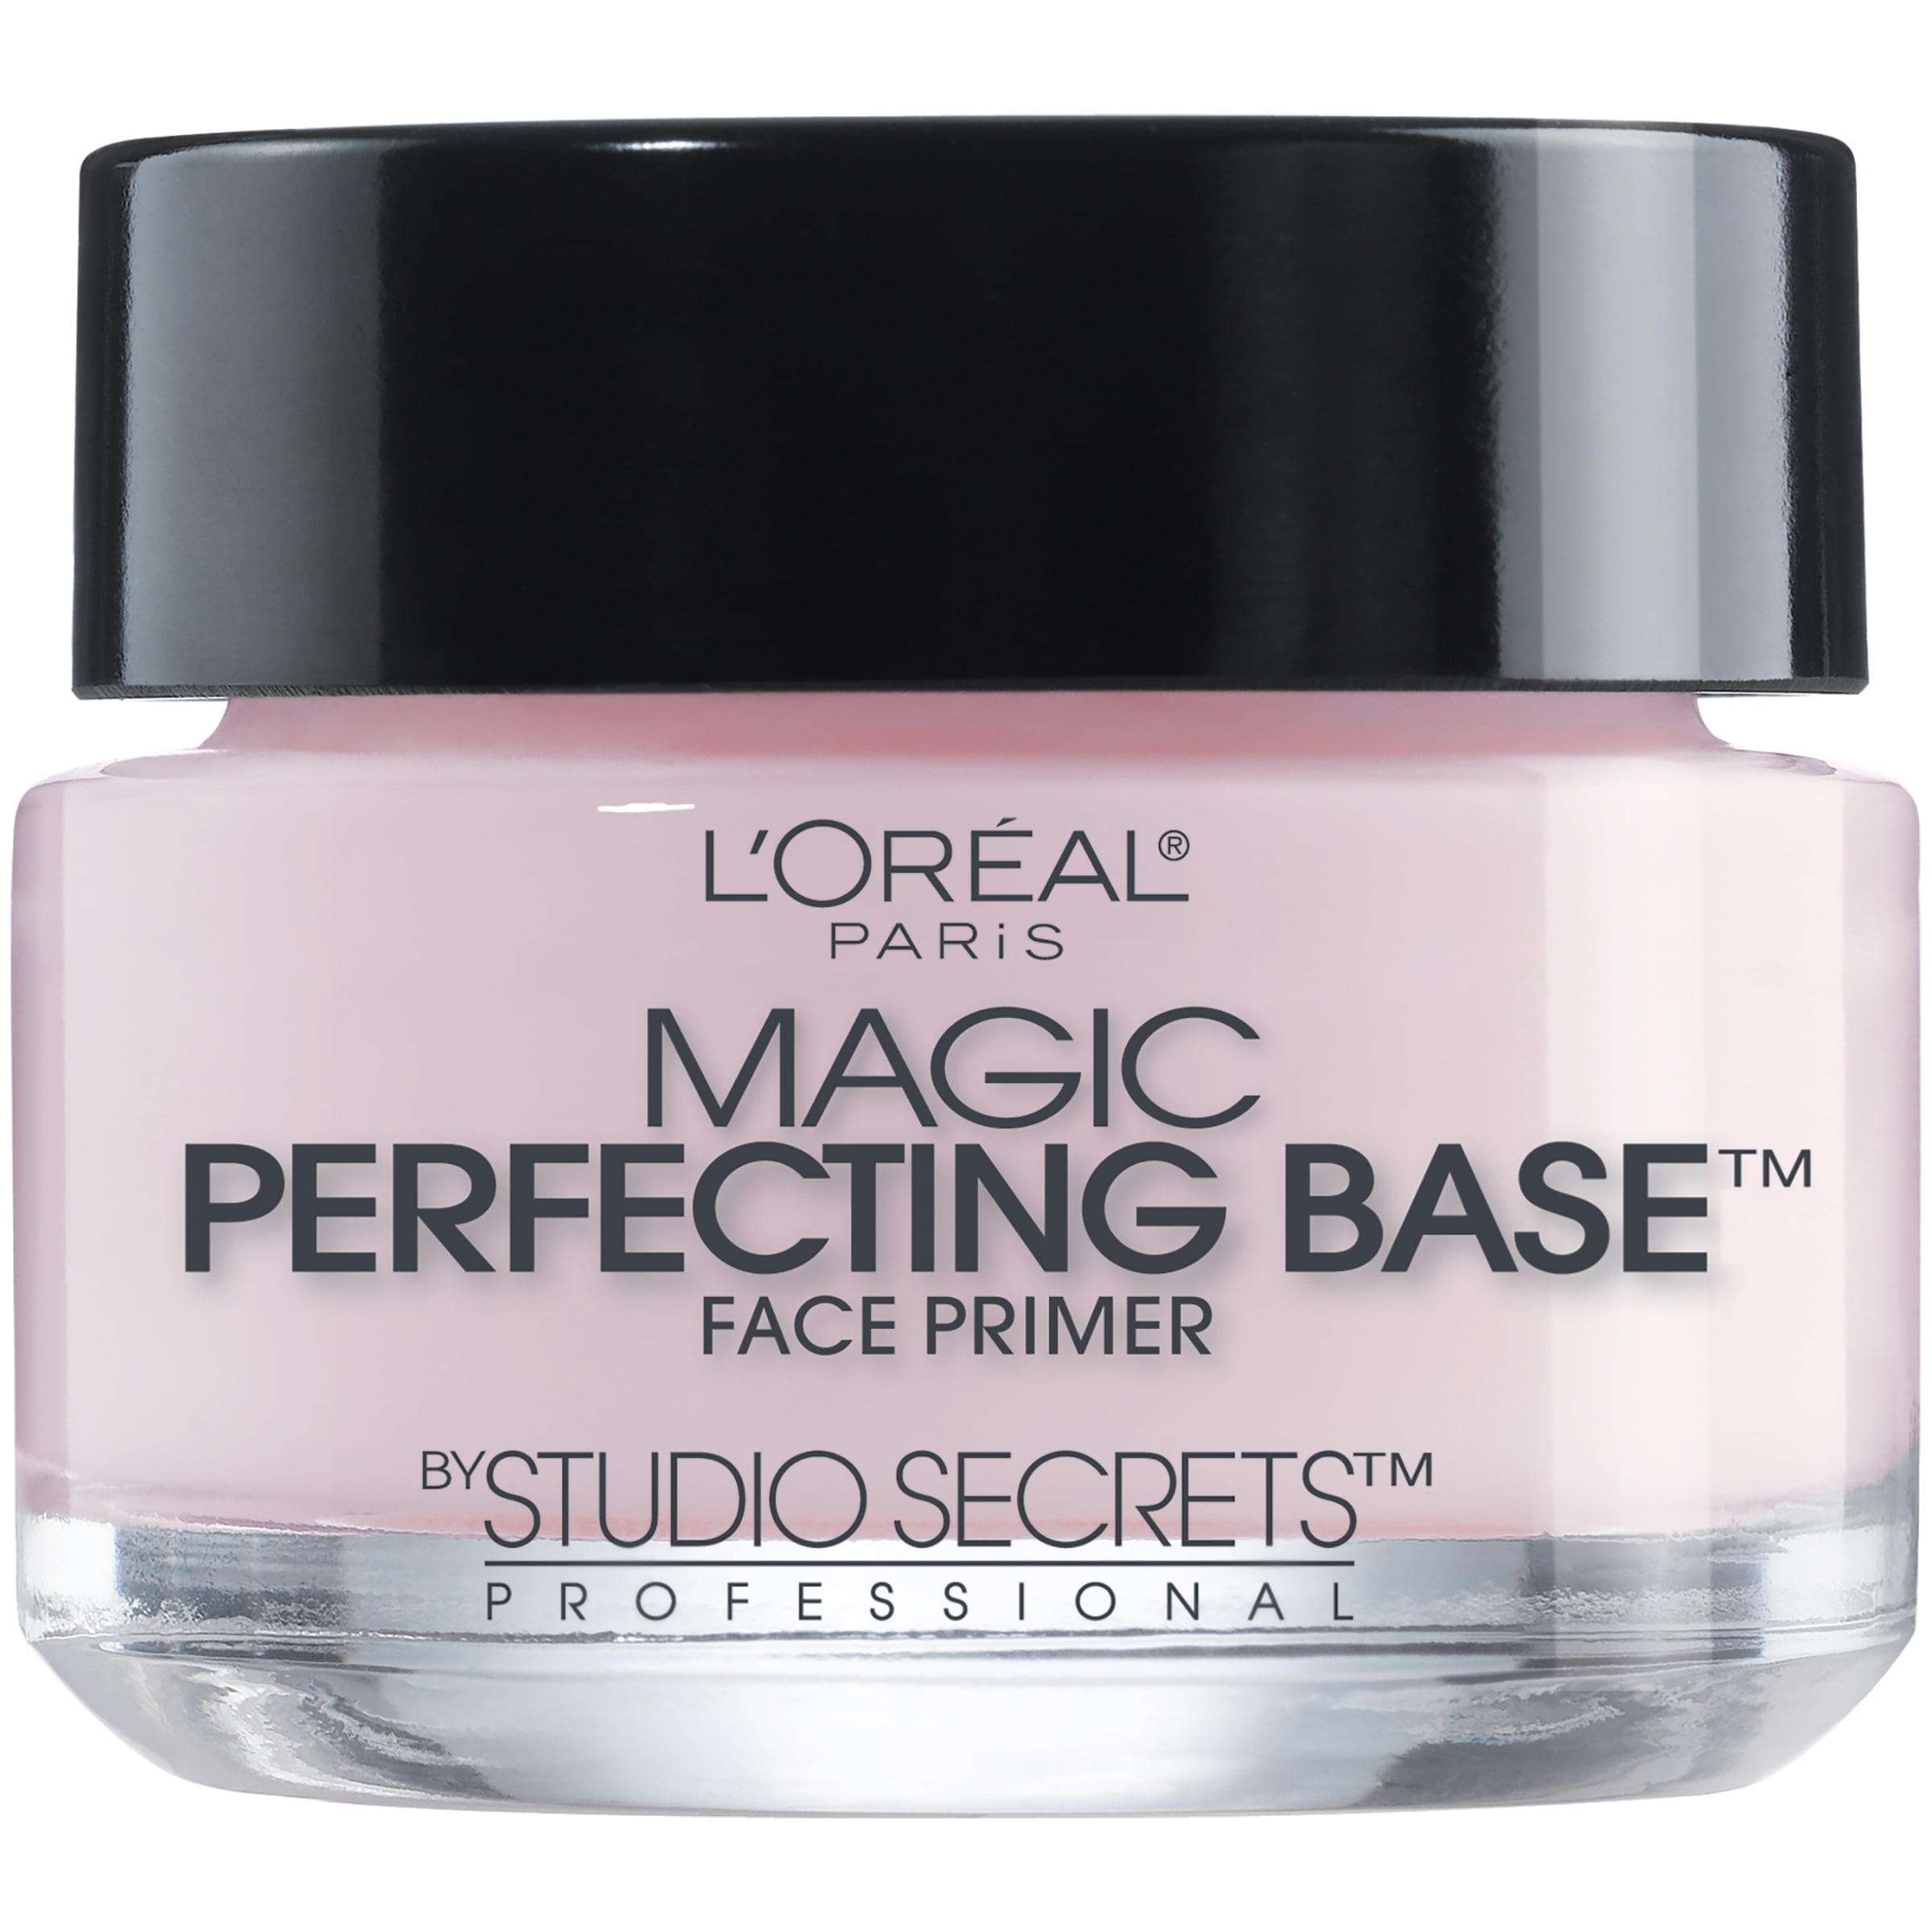 L'Oreal Paris Studio Secrets Professional Magic Perfecting Base, Face Primer, 0.5 fl oz